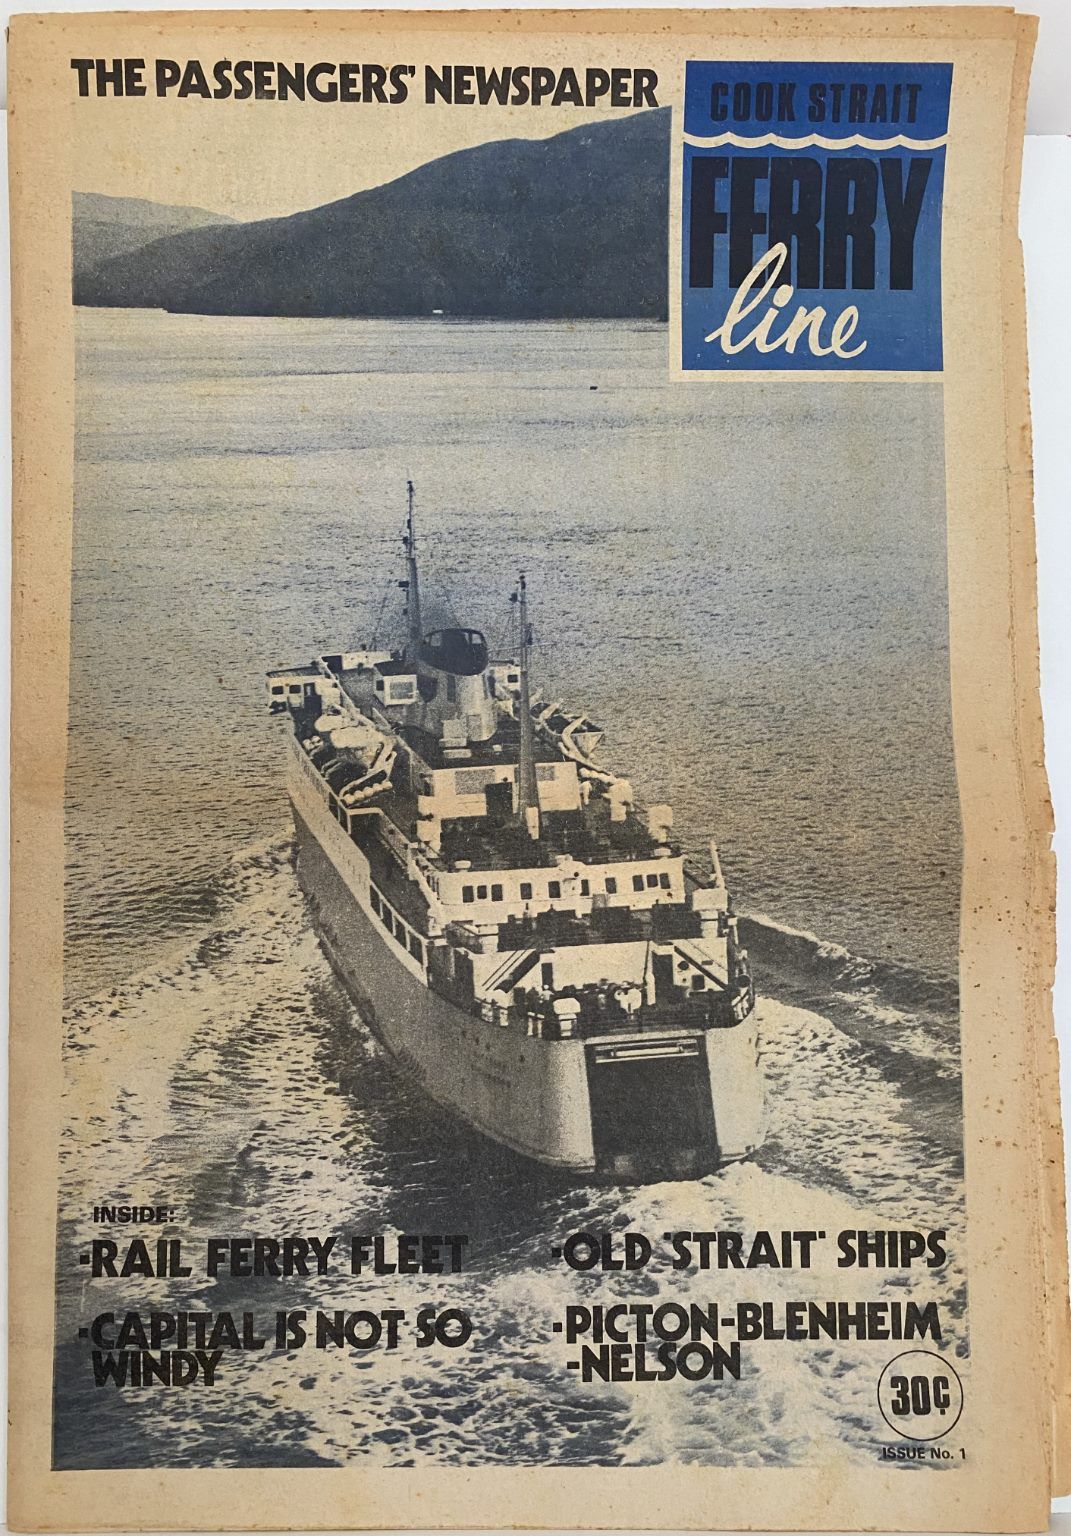 OLD NEWSPAPER: Cook Strait Ferry Line - Passenger's Newspaper February 1975